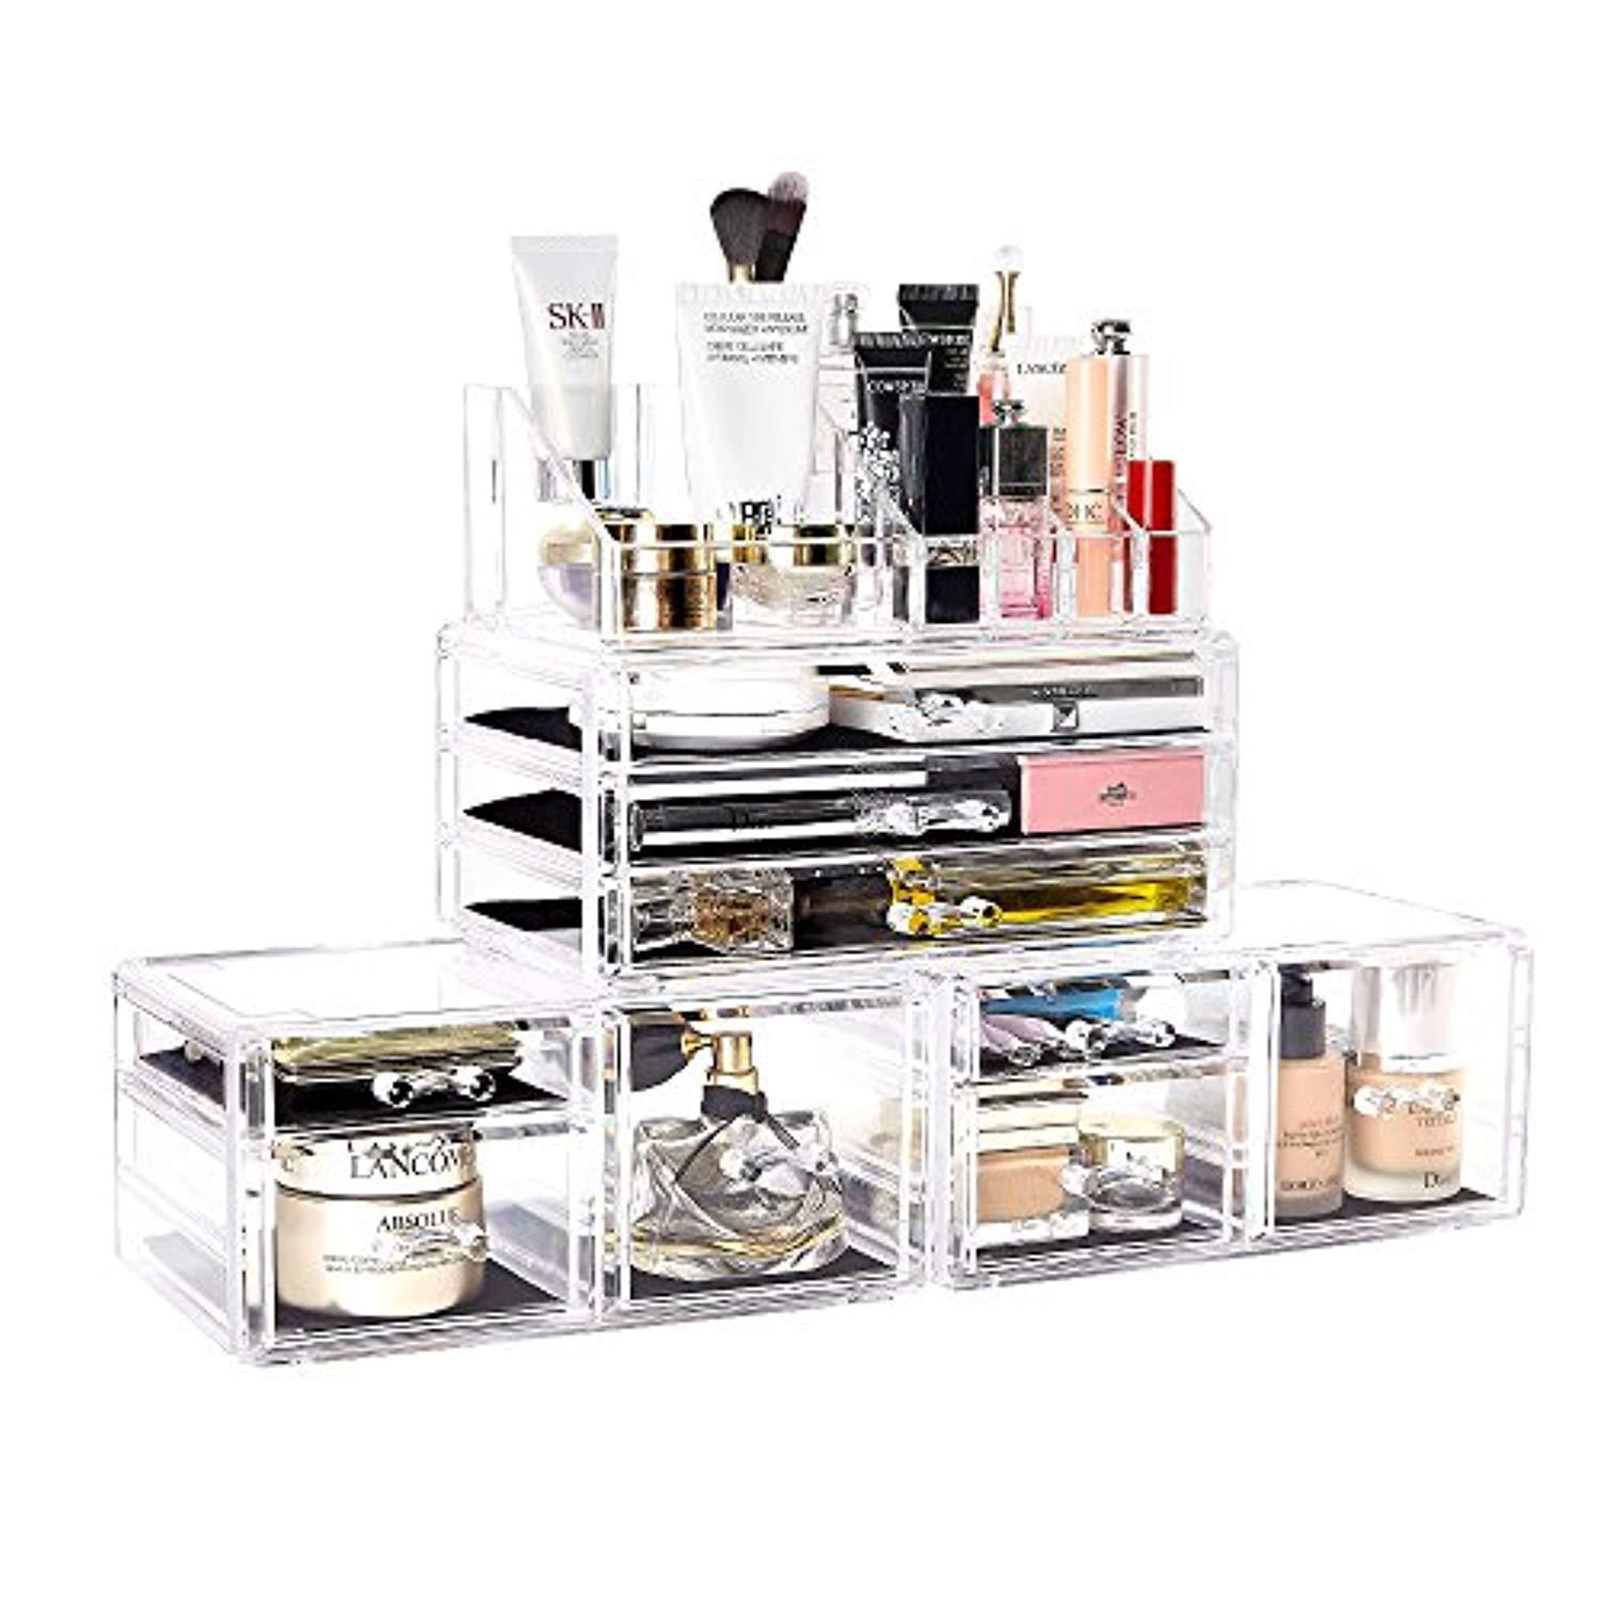 DreamGenius Makeup Organizer 4pc. Acrylic Jewelry and Cosmetic Storage Boxes